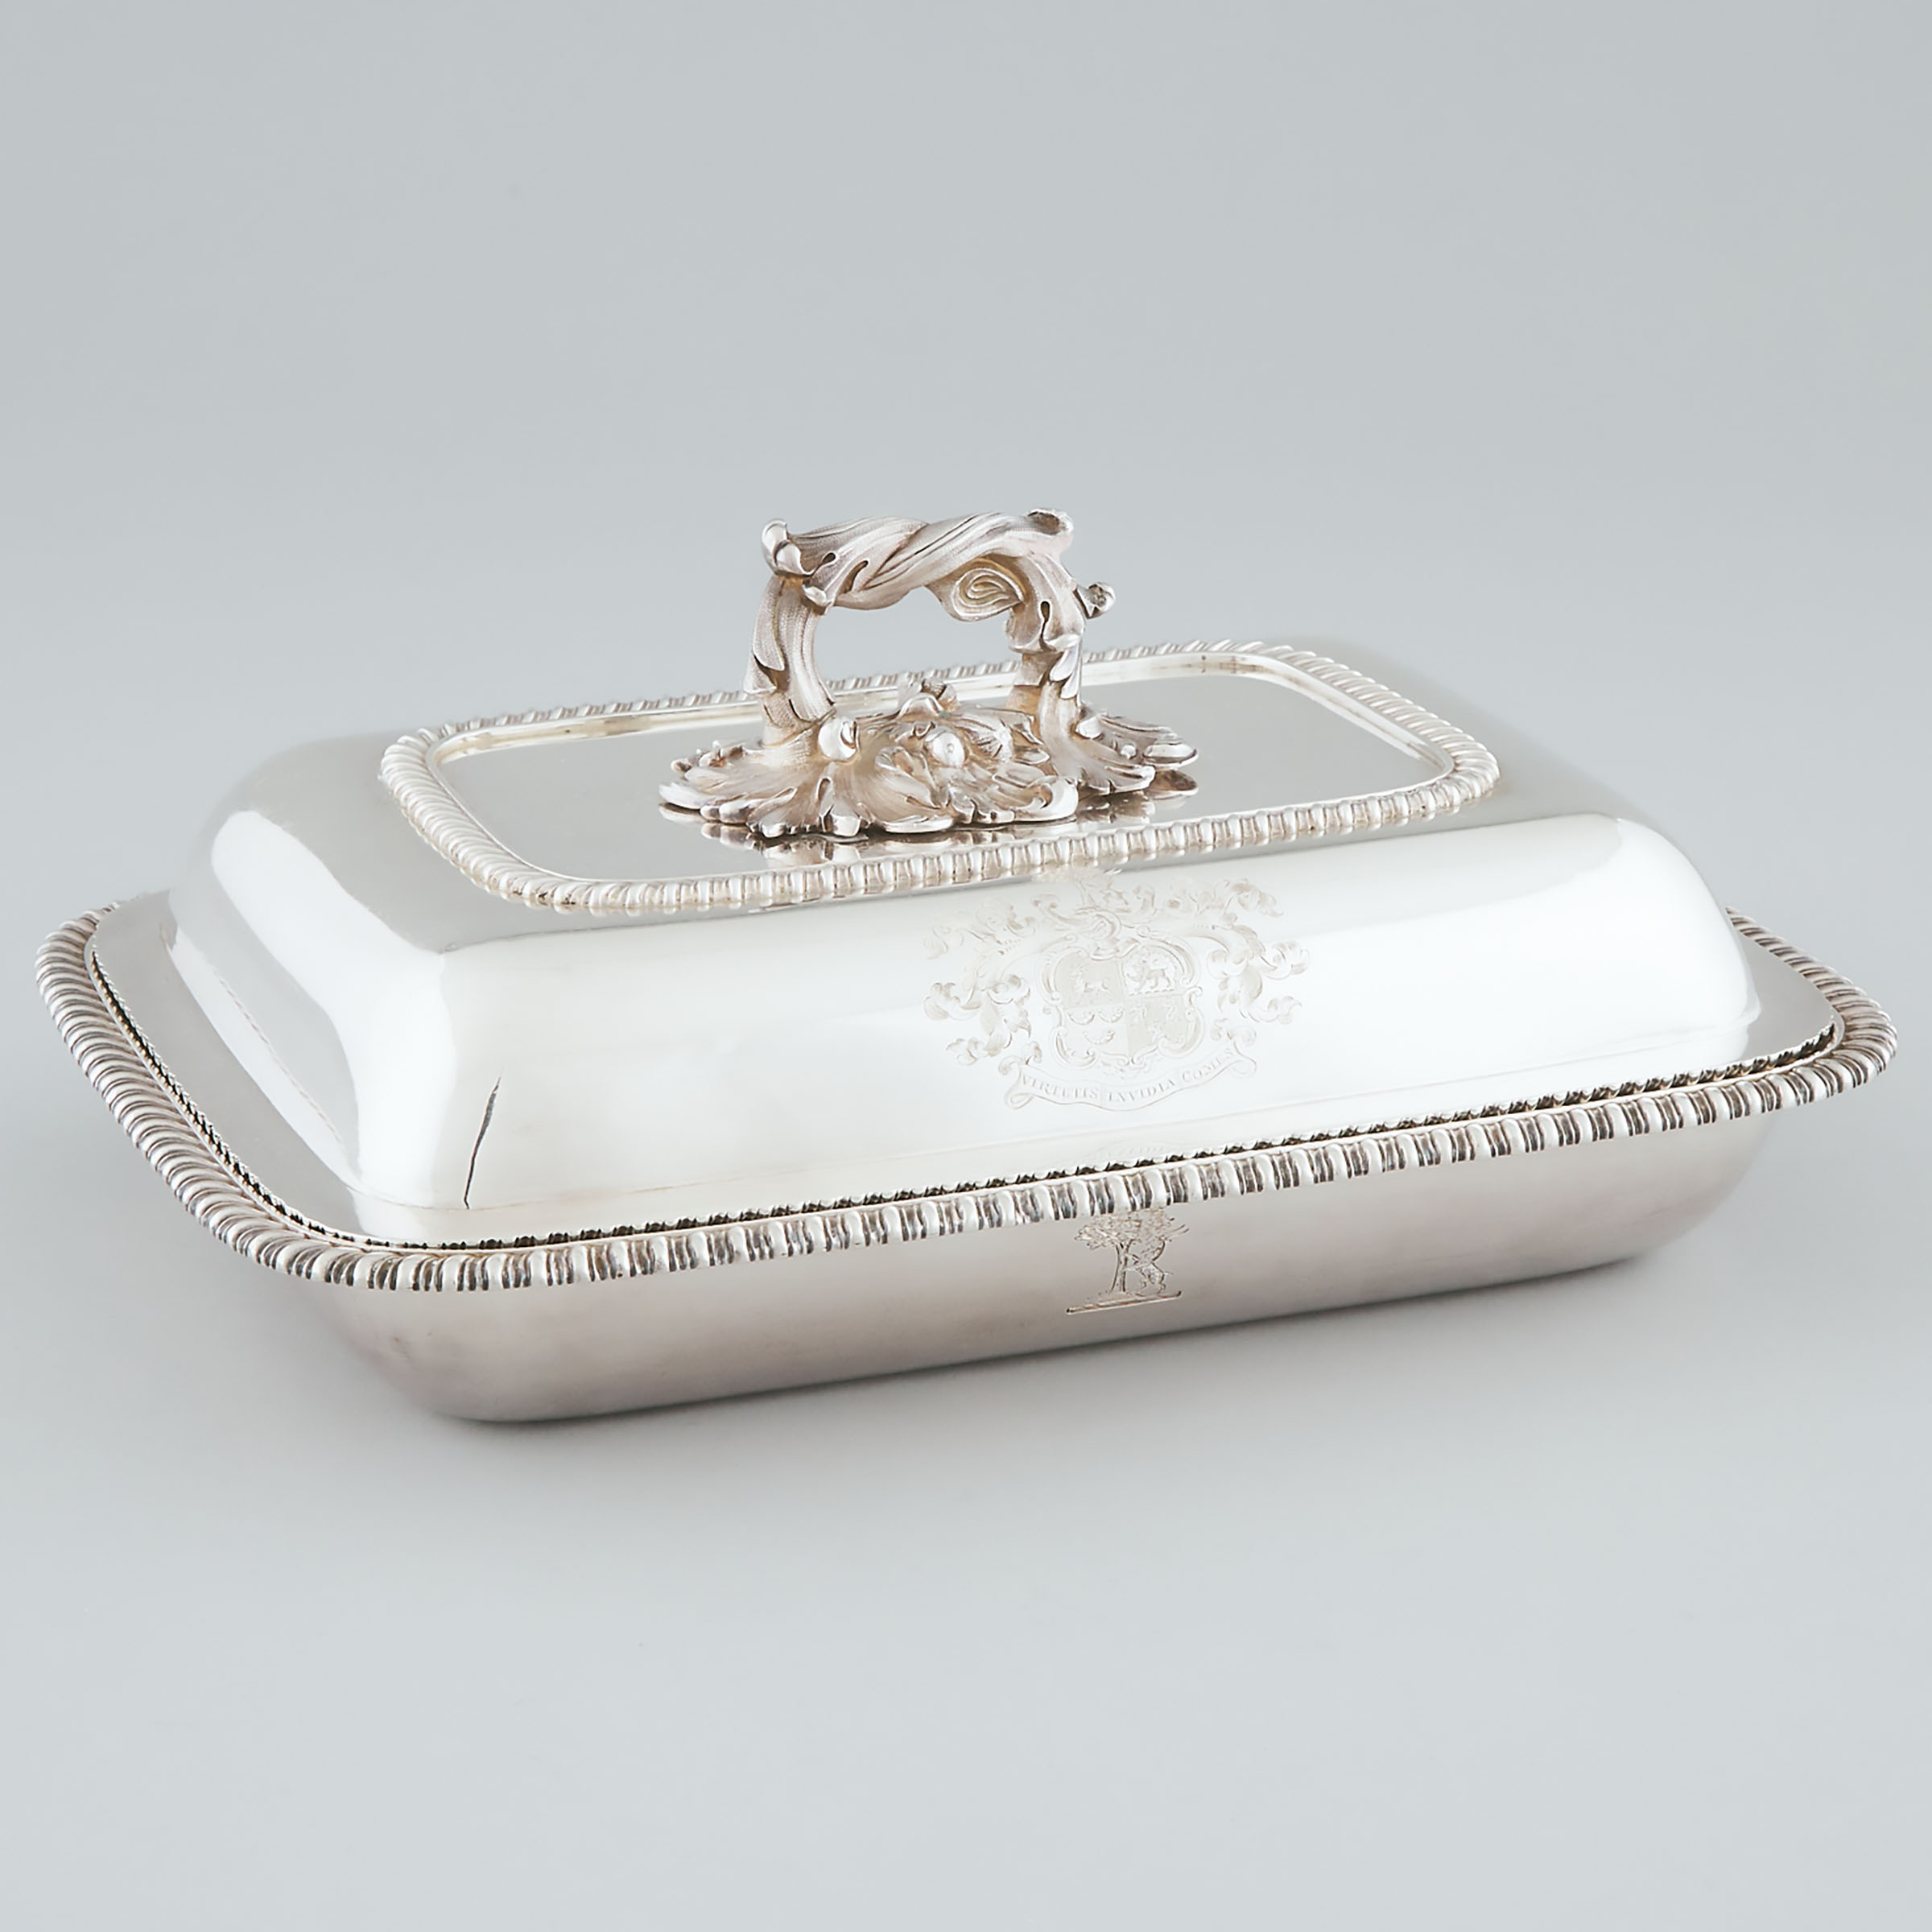 Victorian Silver Rectangular Covered Entrée Dish, William Ker Reid, London, 1843